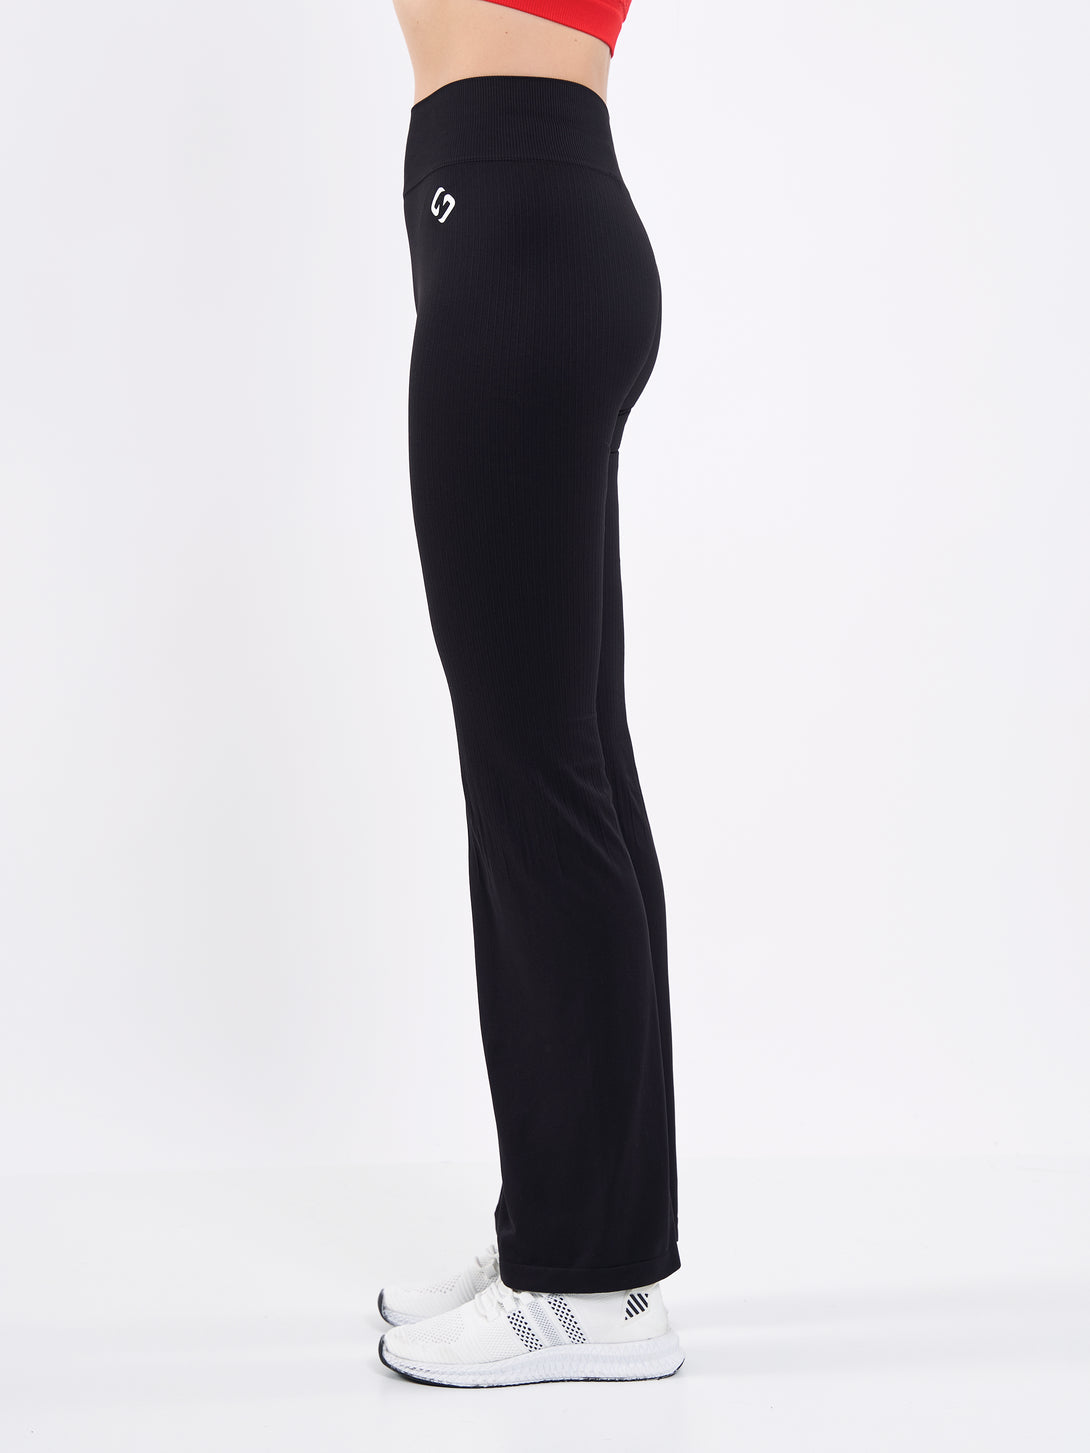 A Woman Wearing Deep Black Color Antigravity Seamless Flare-Leg Yoga Pants. Ultra-Light